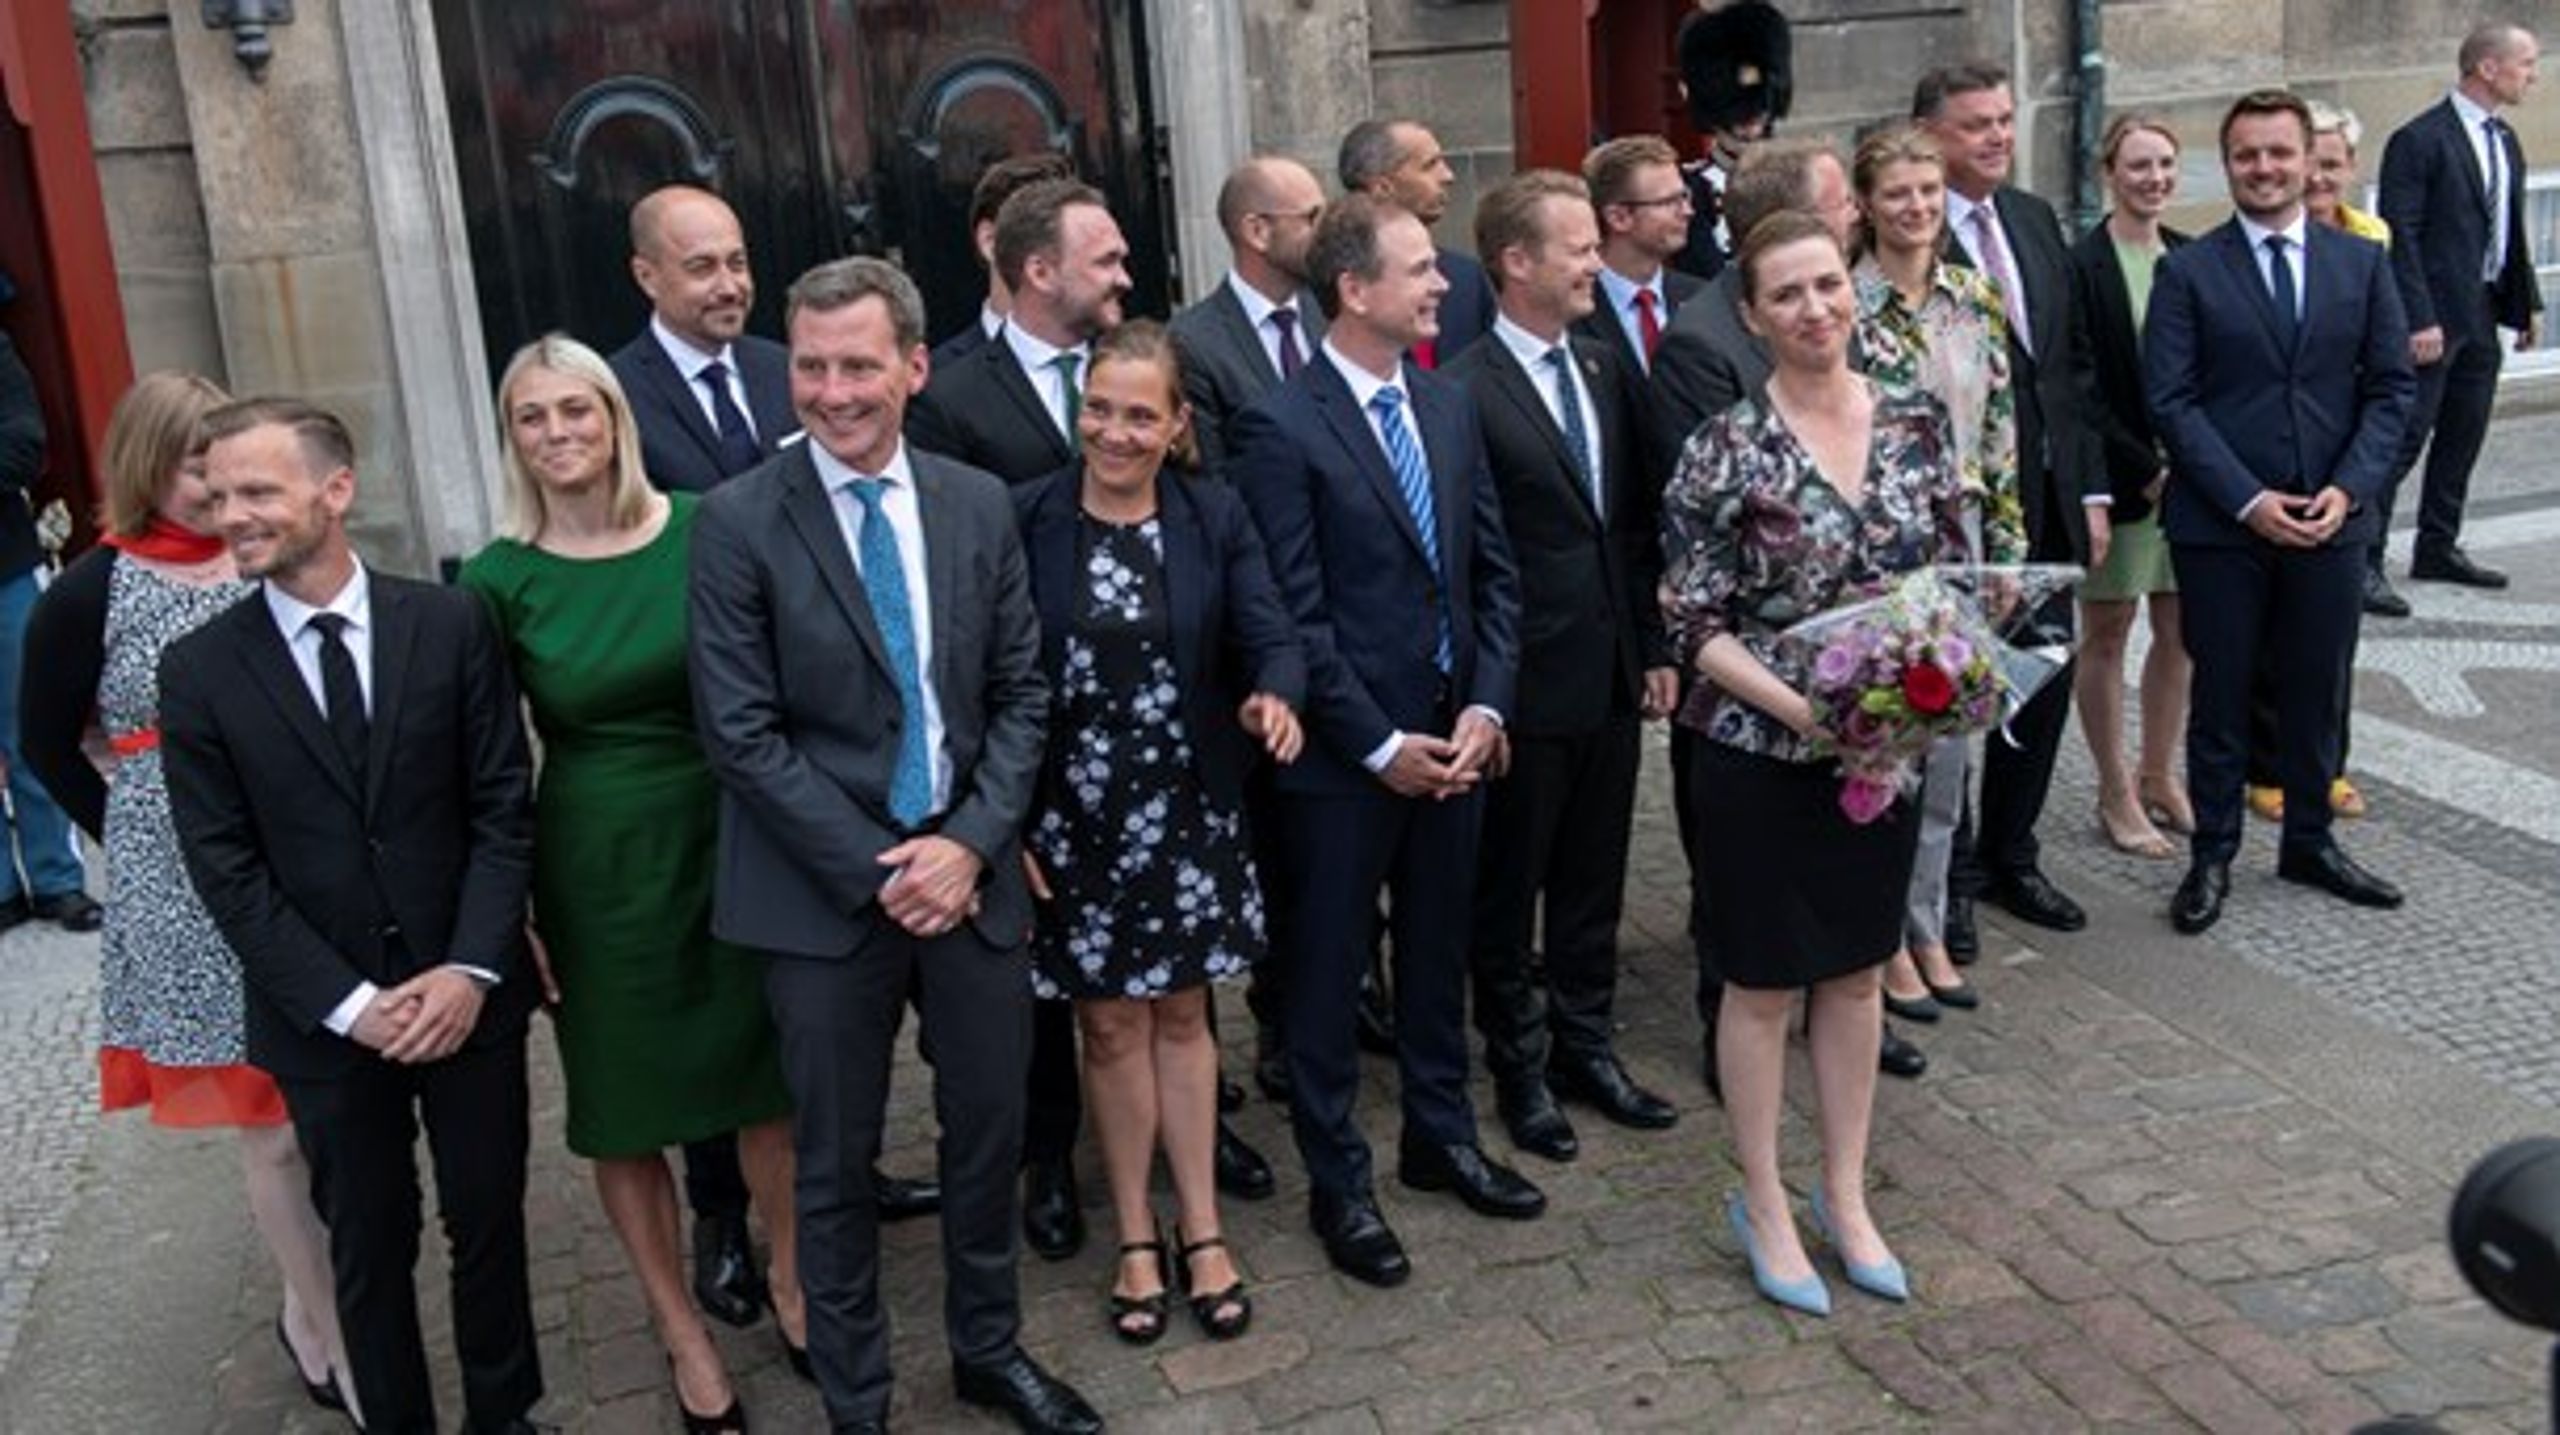 Den nye S-regering foran Amalienborg.